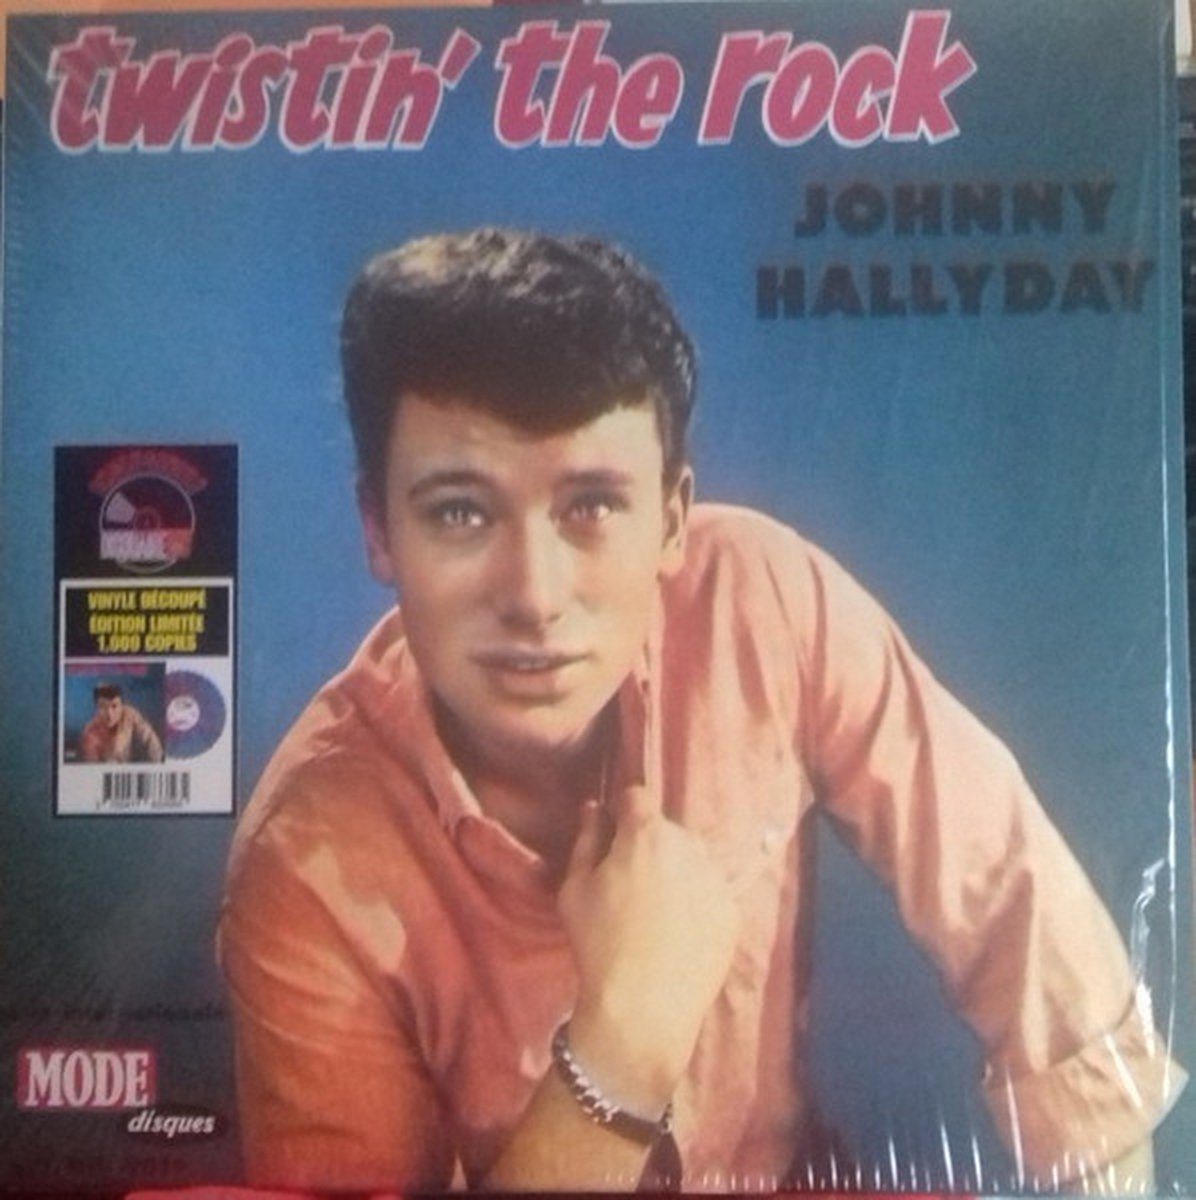 Johnny Hallyday - Twistin' the rock -rsd-